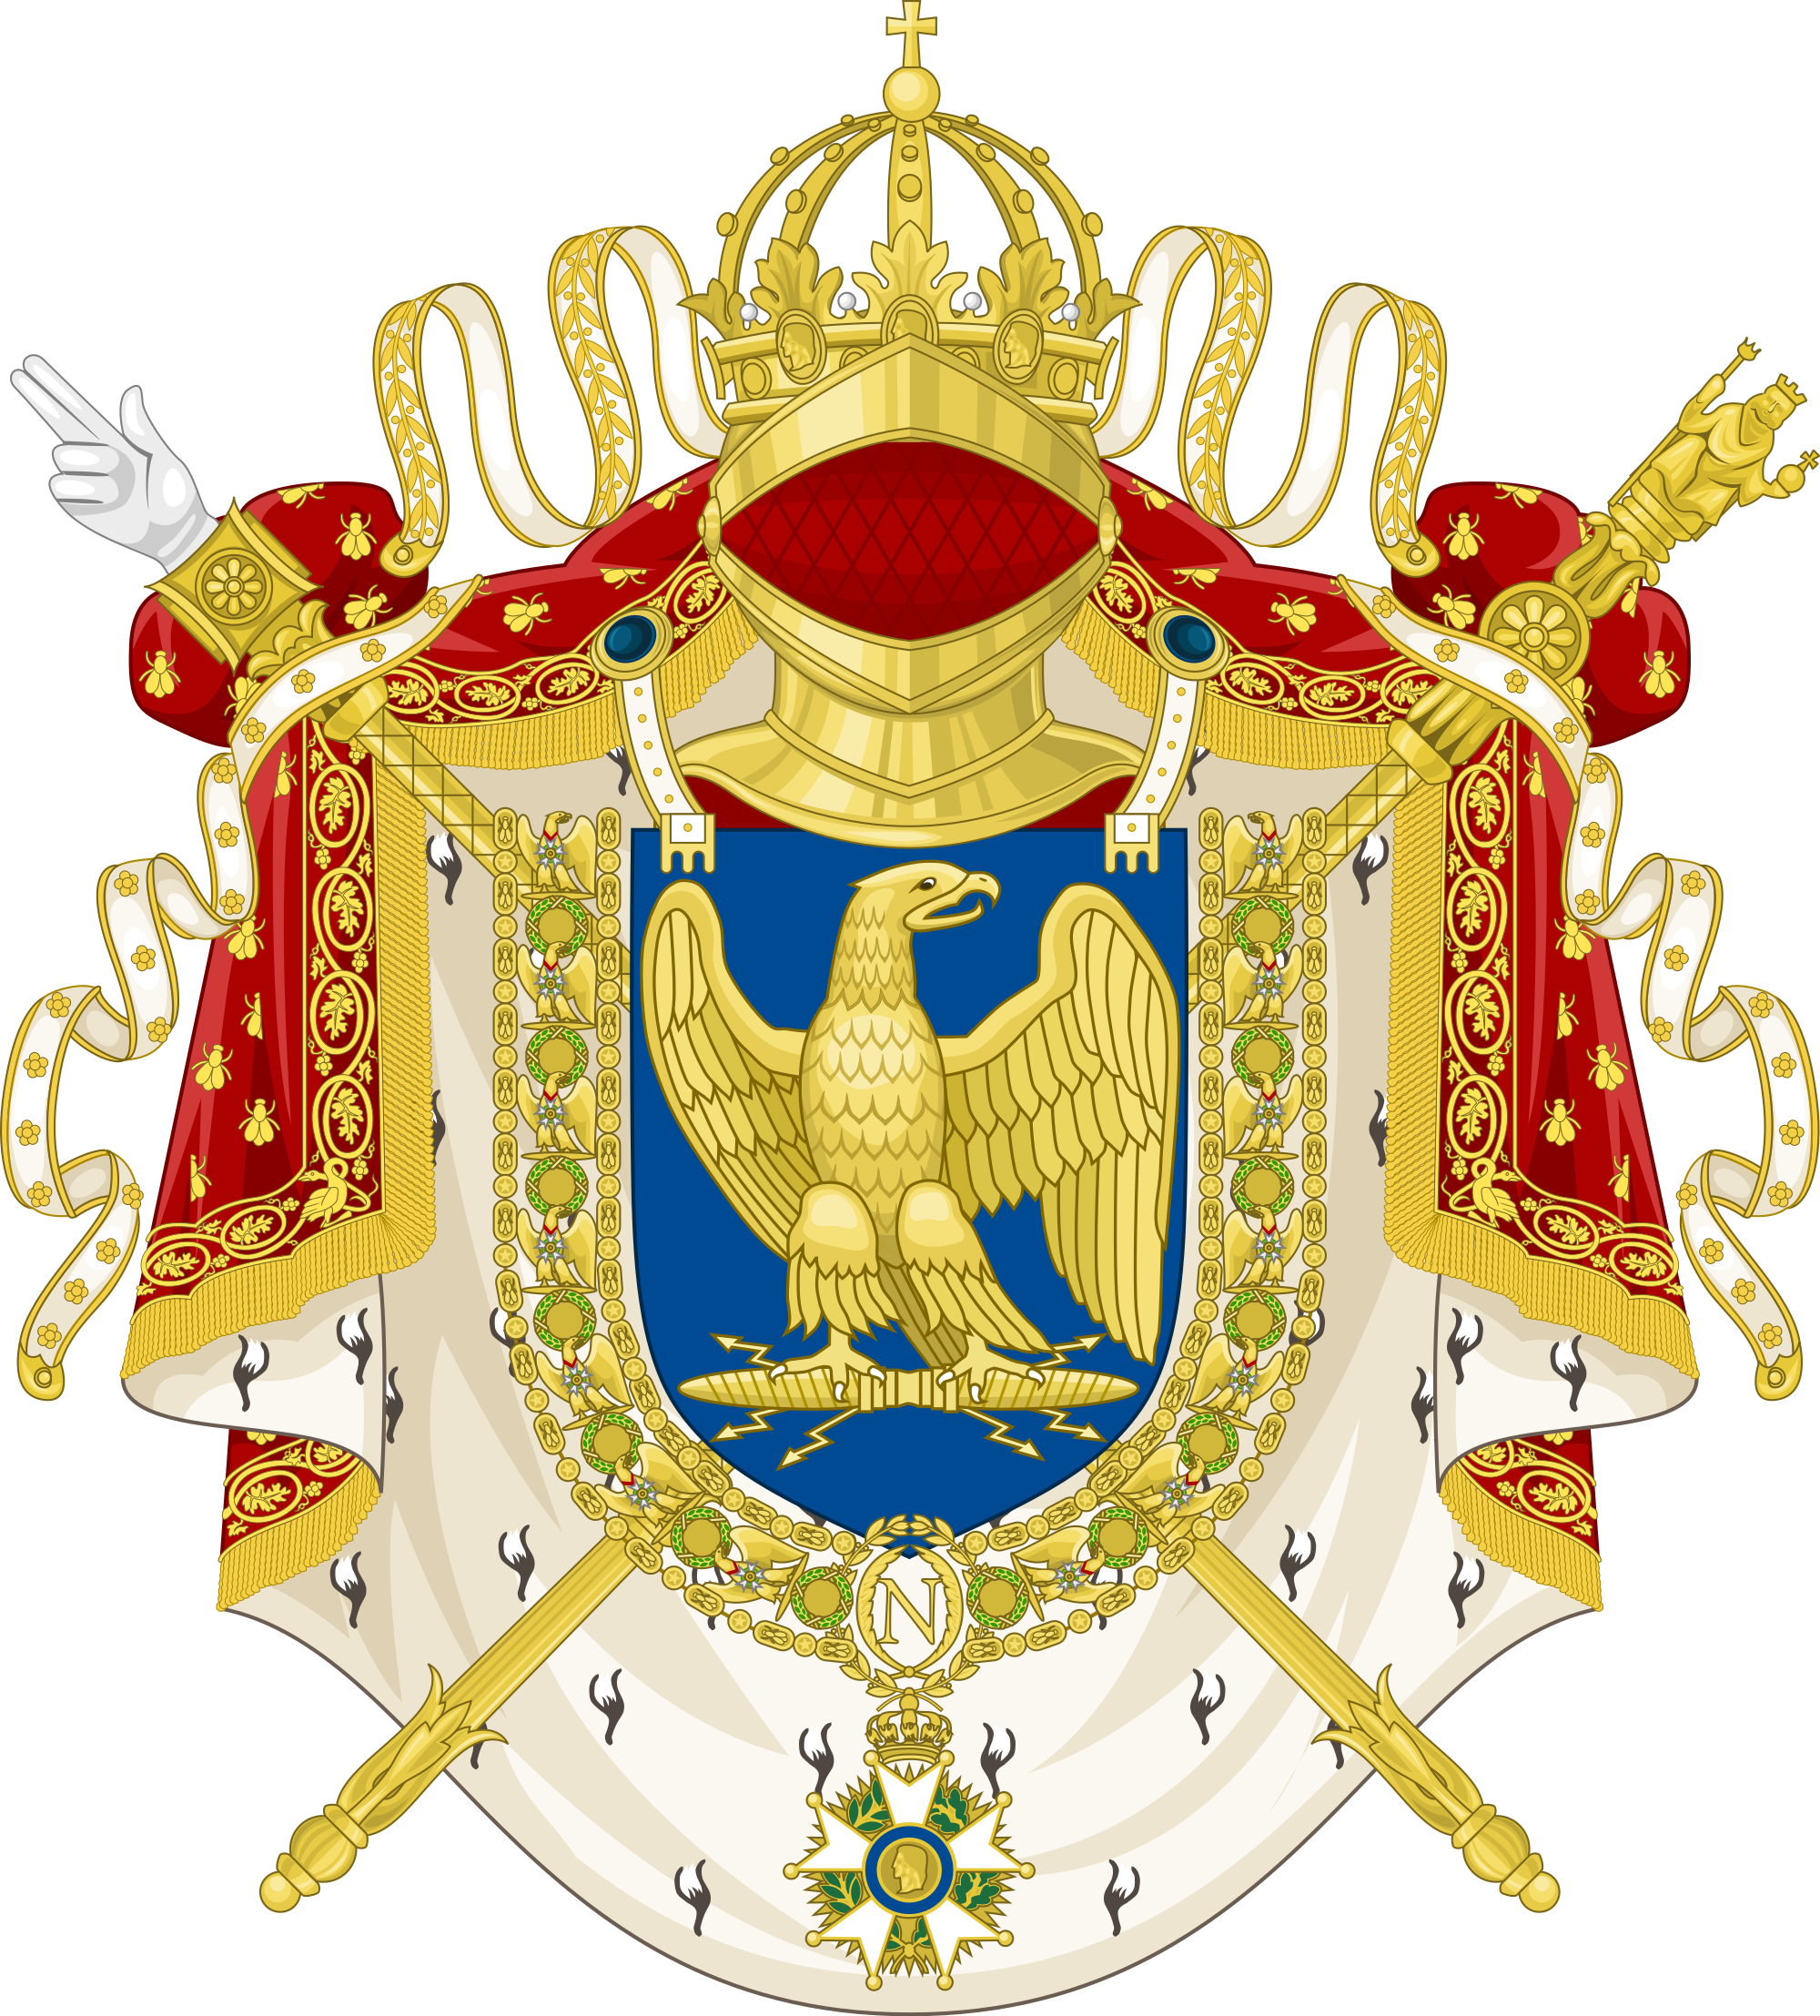 Armes et Sceau de l'Empire Français (Arms and Seal of the French Empire)